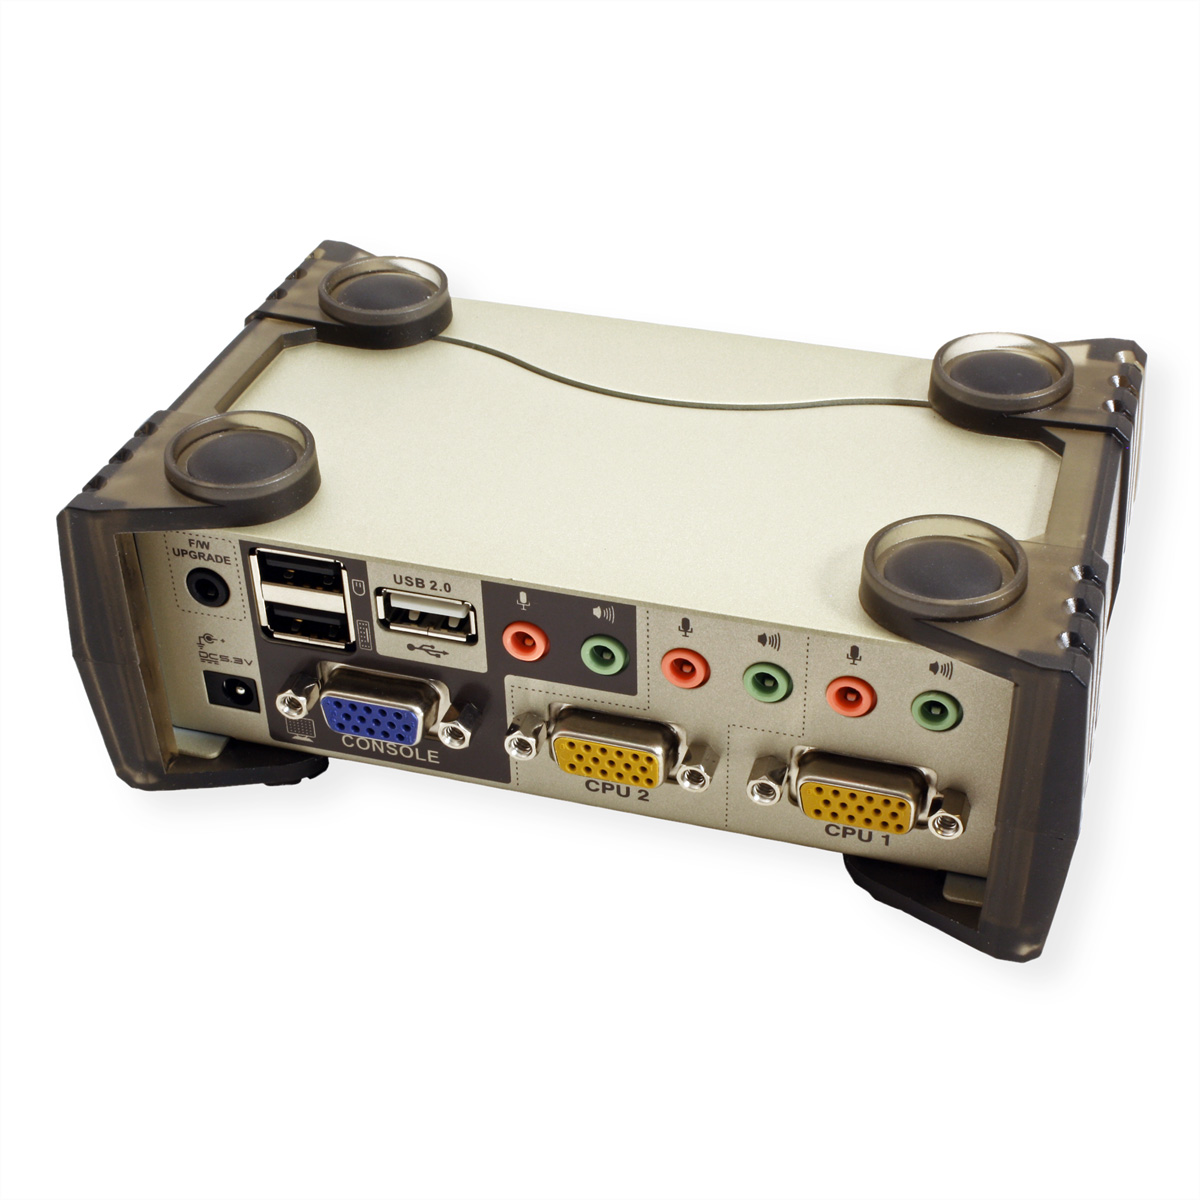 USB-Hub, Audio, VGA VGA, 2 PS/2-USB, ATEN Switch CS1732B KVM KVM-Switch, Ports